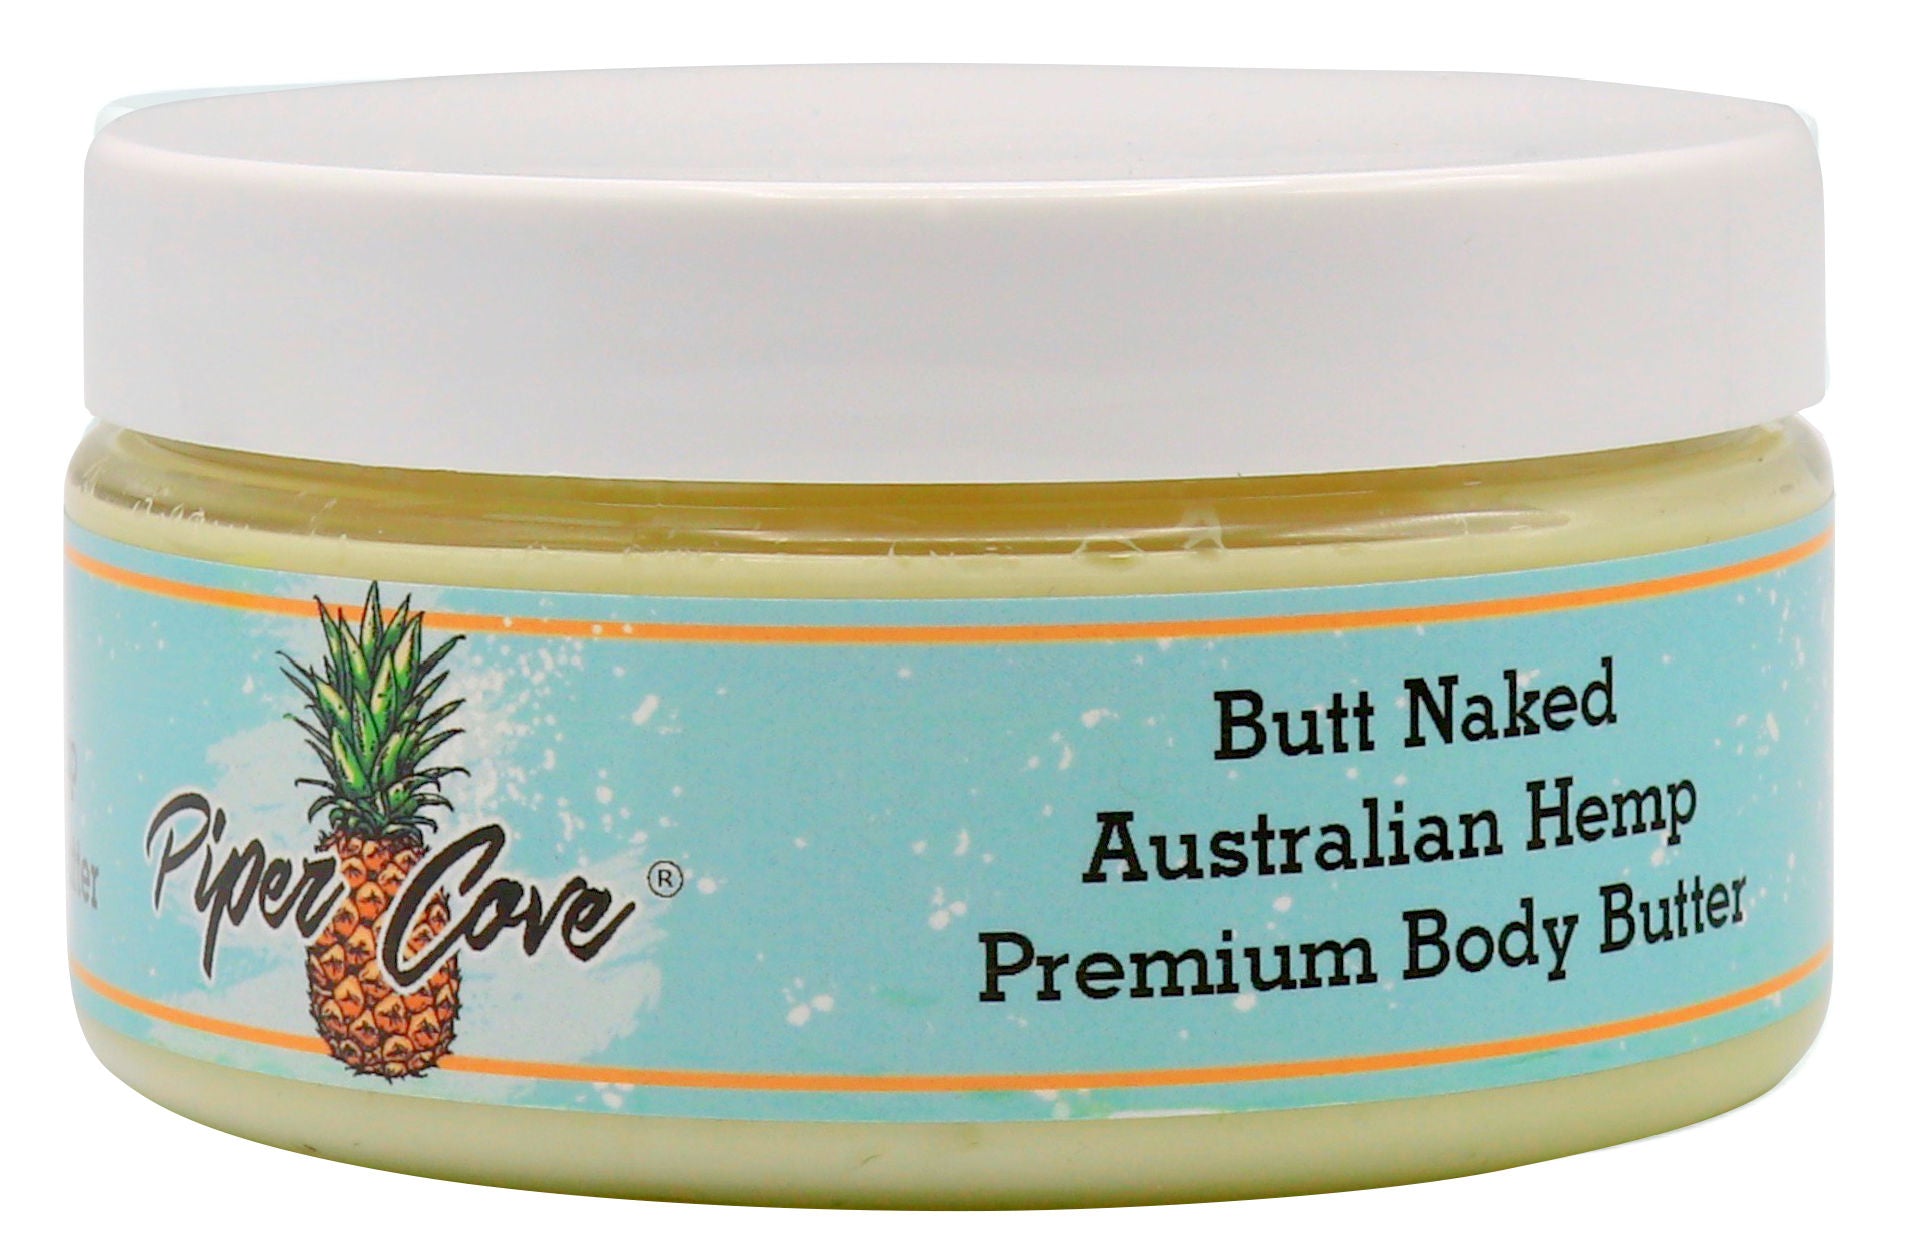 Australian Hemp Premium Body Butter | 8 oz